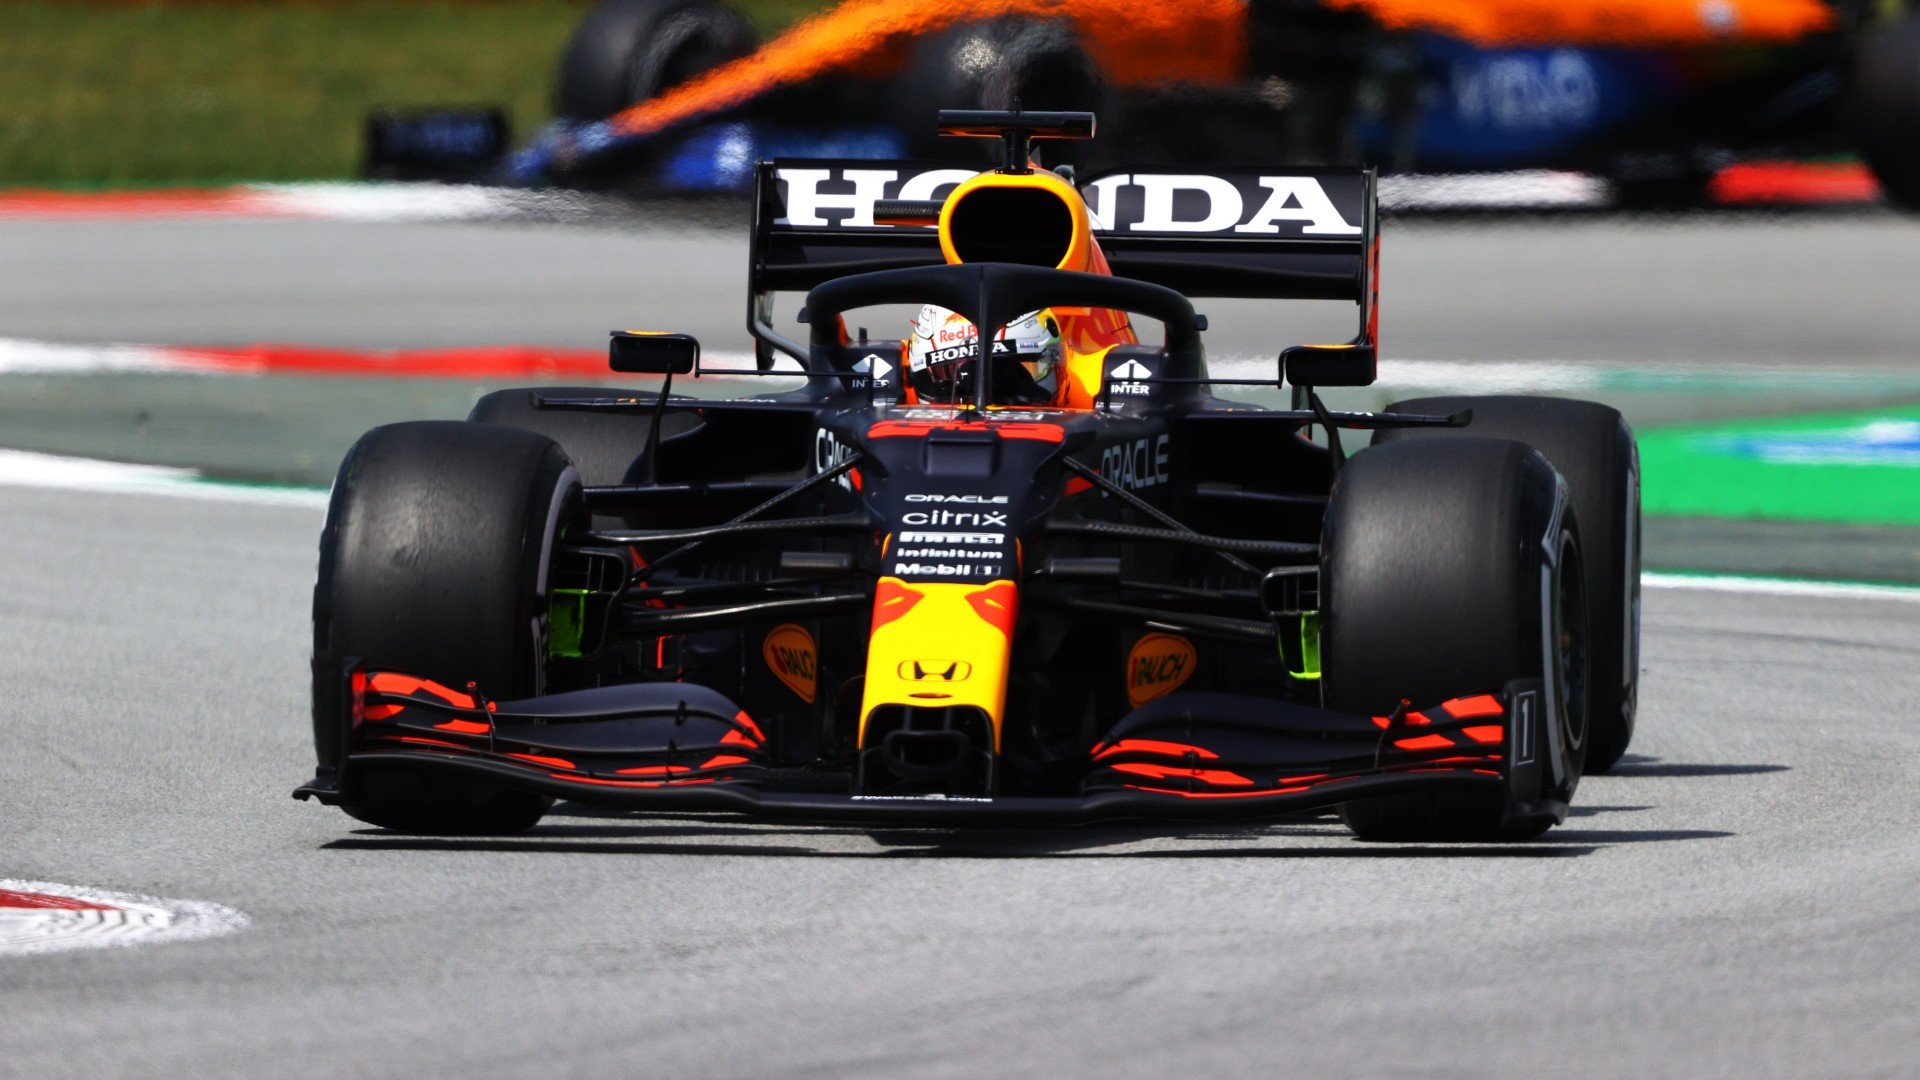 Max Verstappen and Red Bull favourites in Monaco despite Spain loss